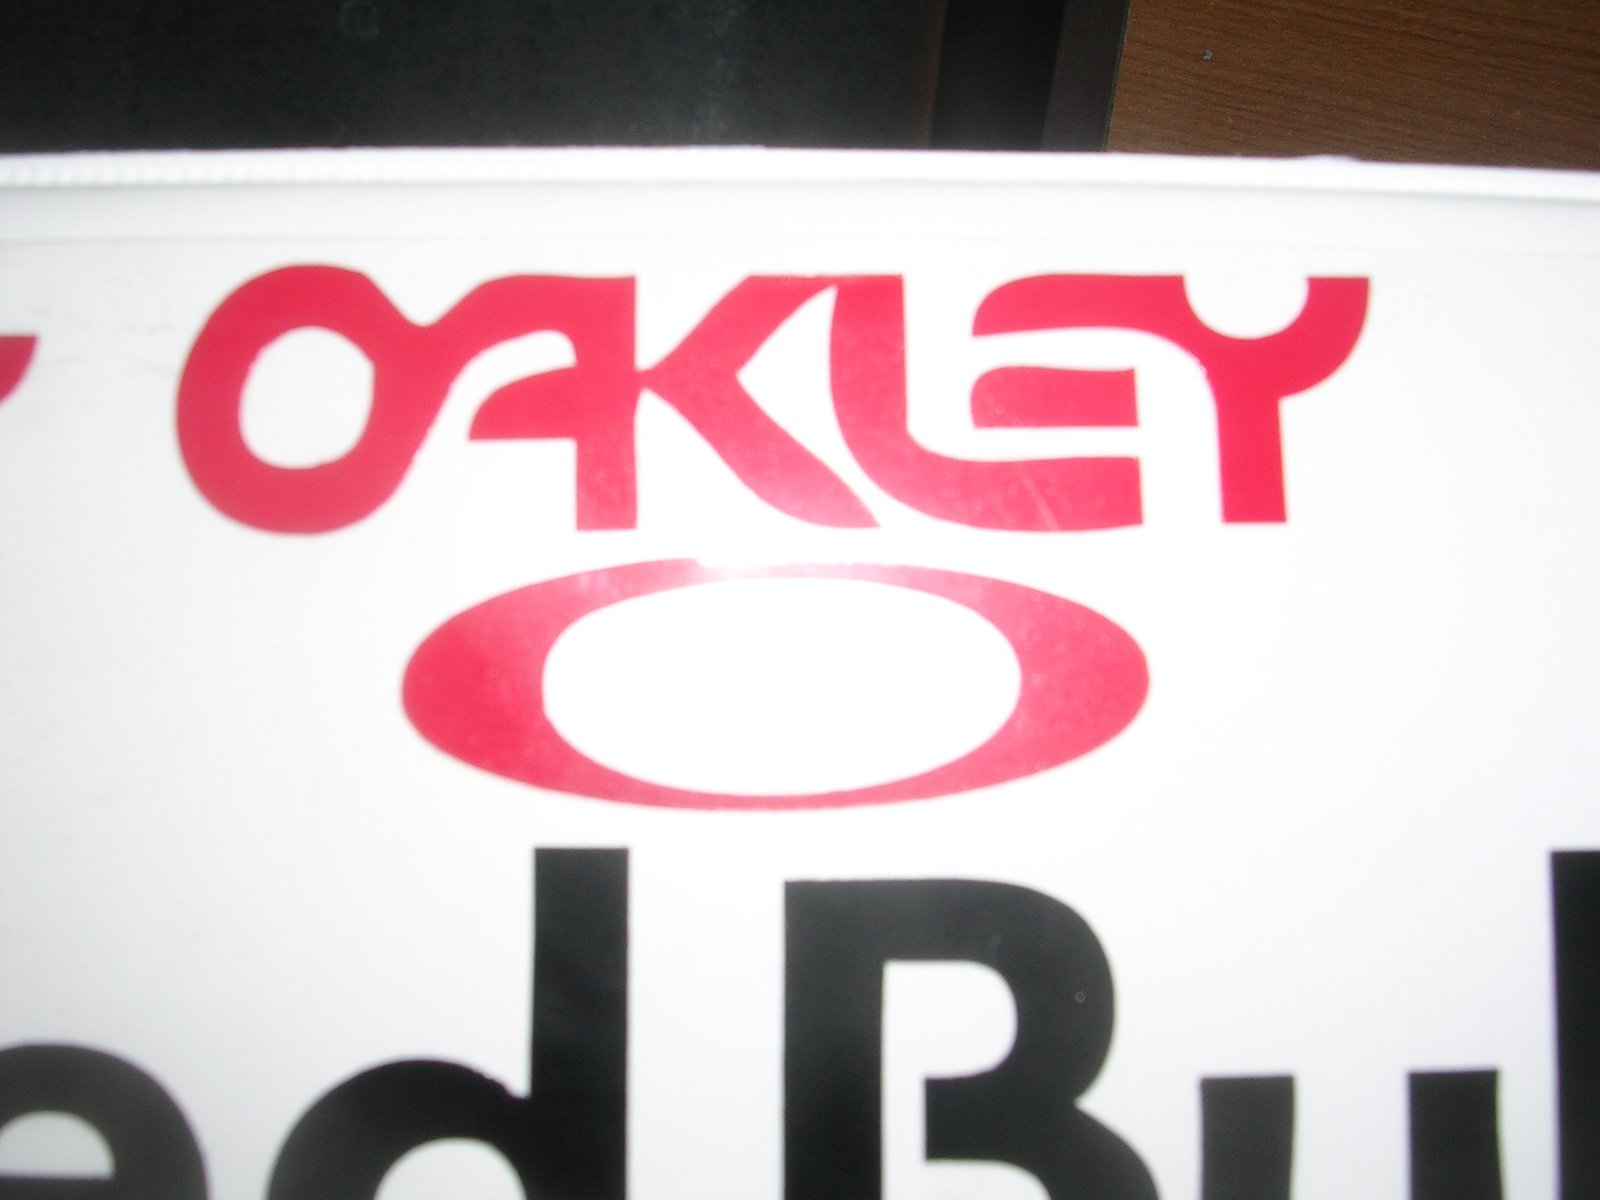 Oakley sticker i have made